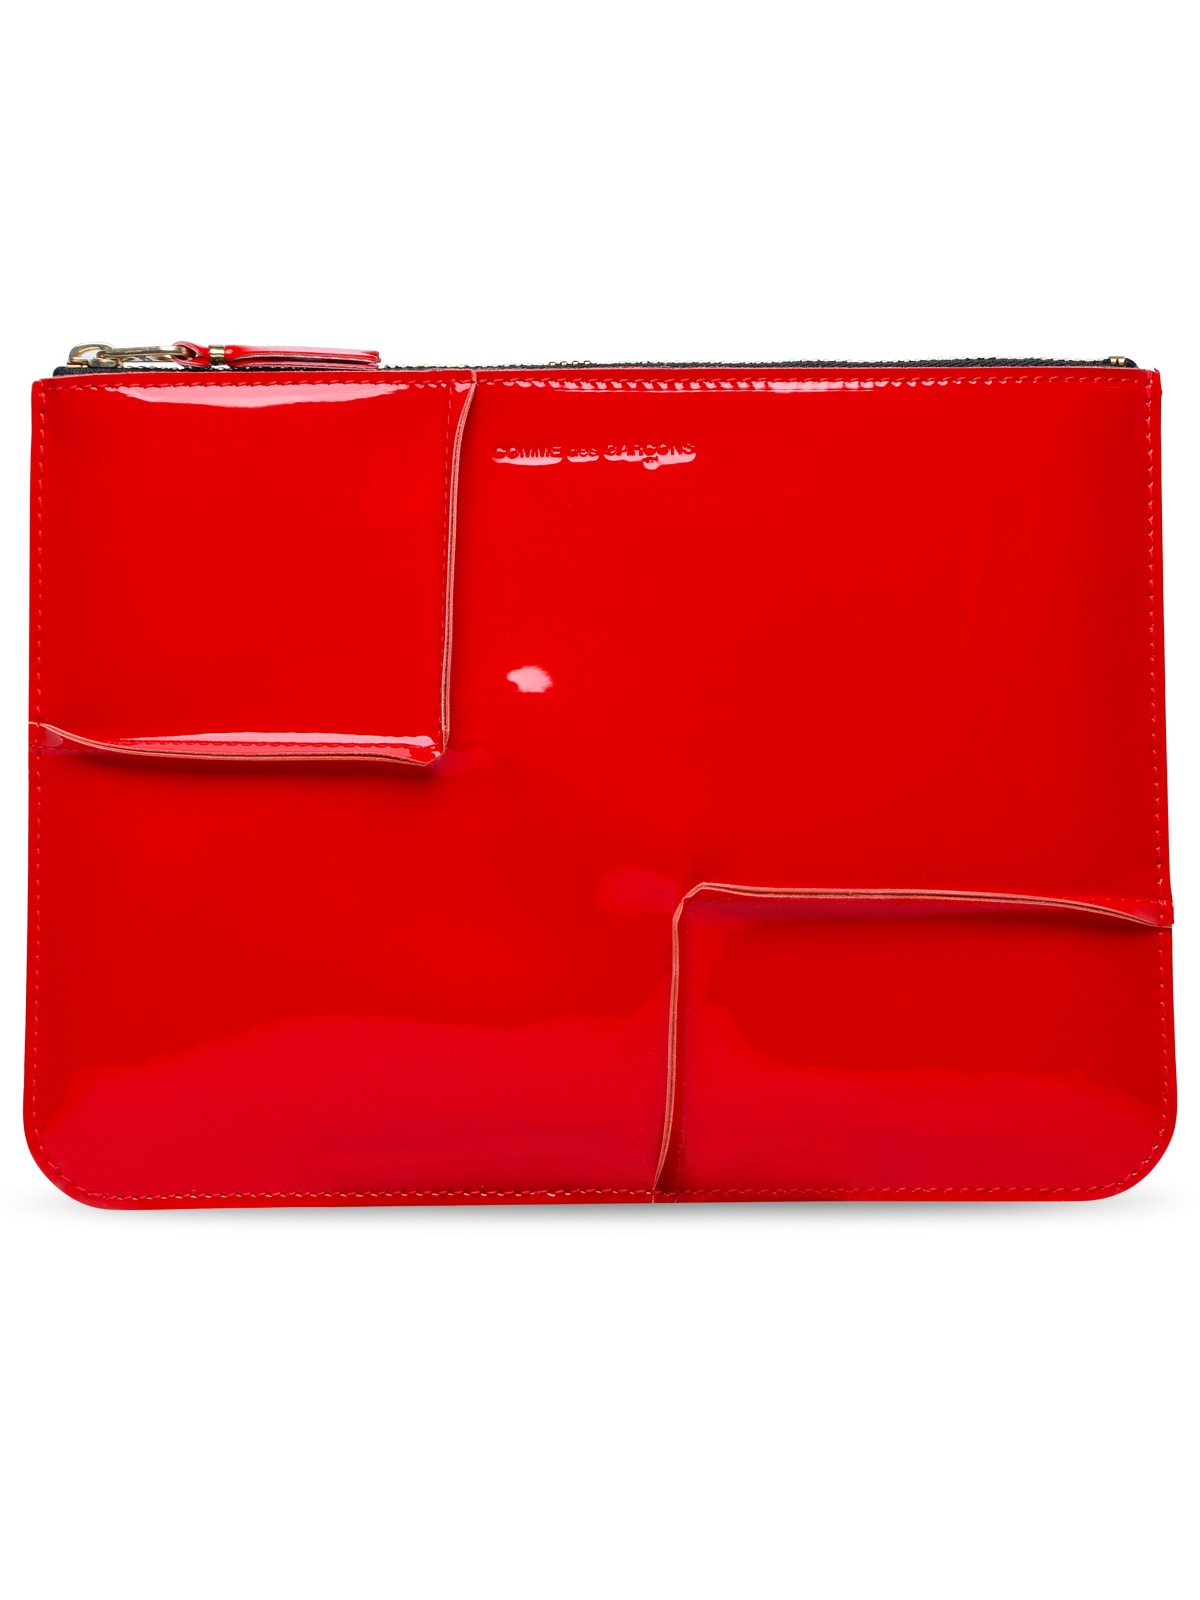 medley Red Leather Envelope